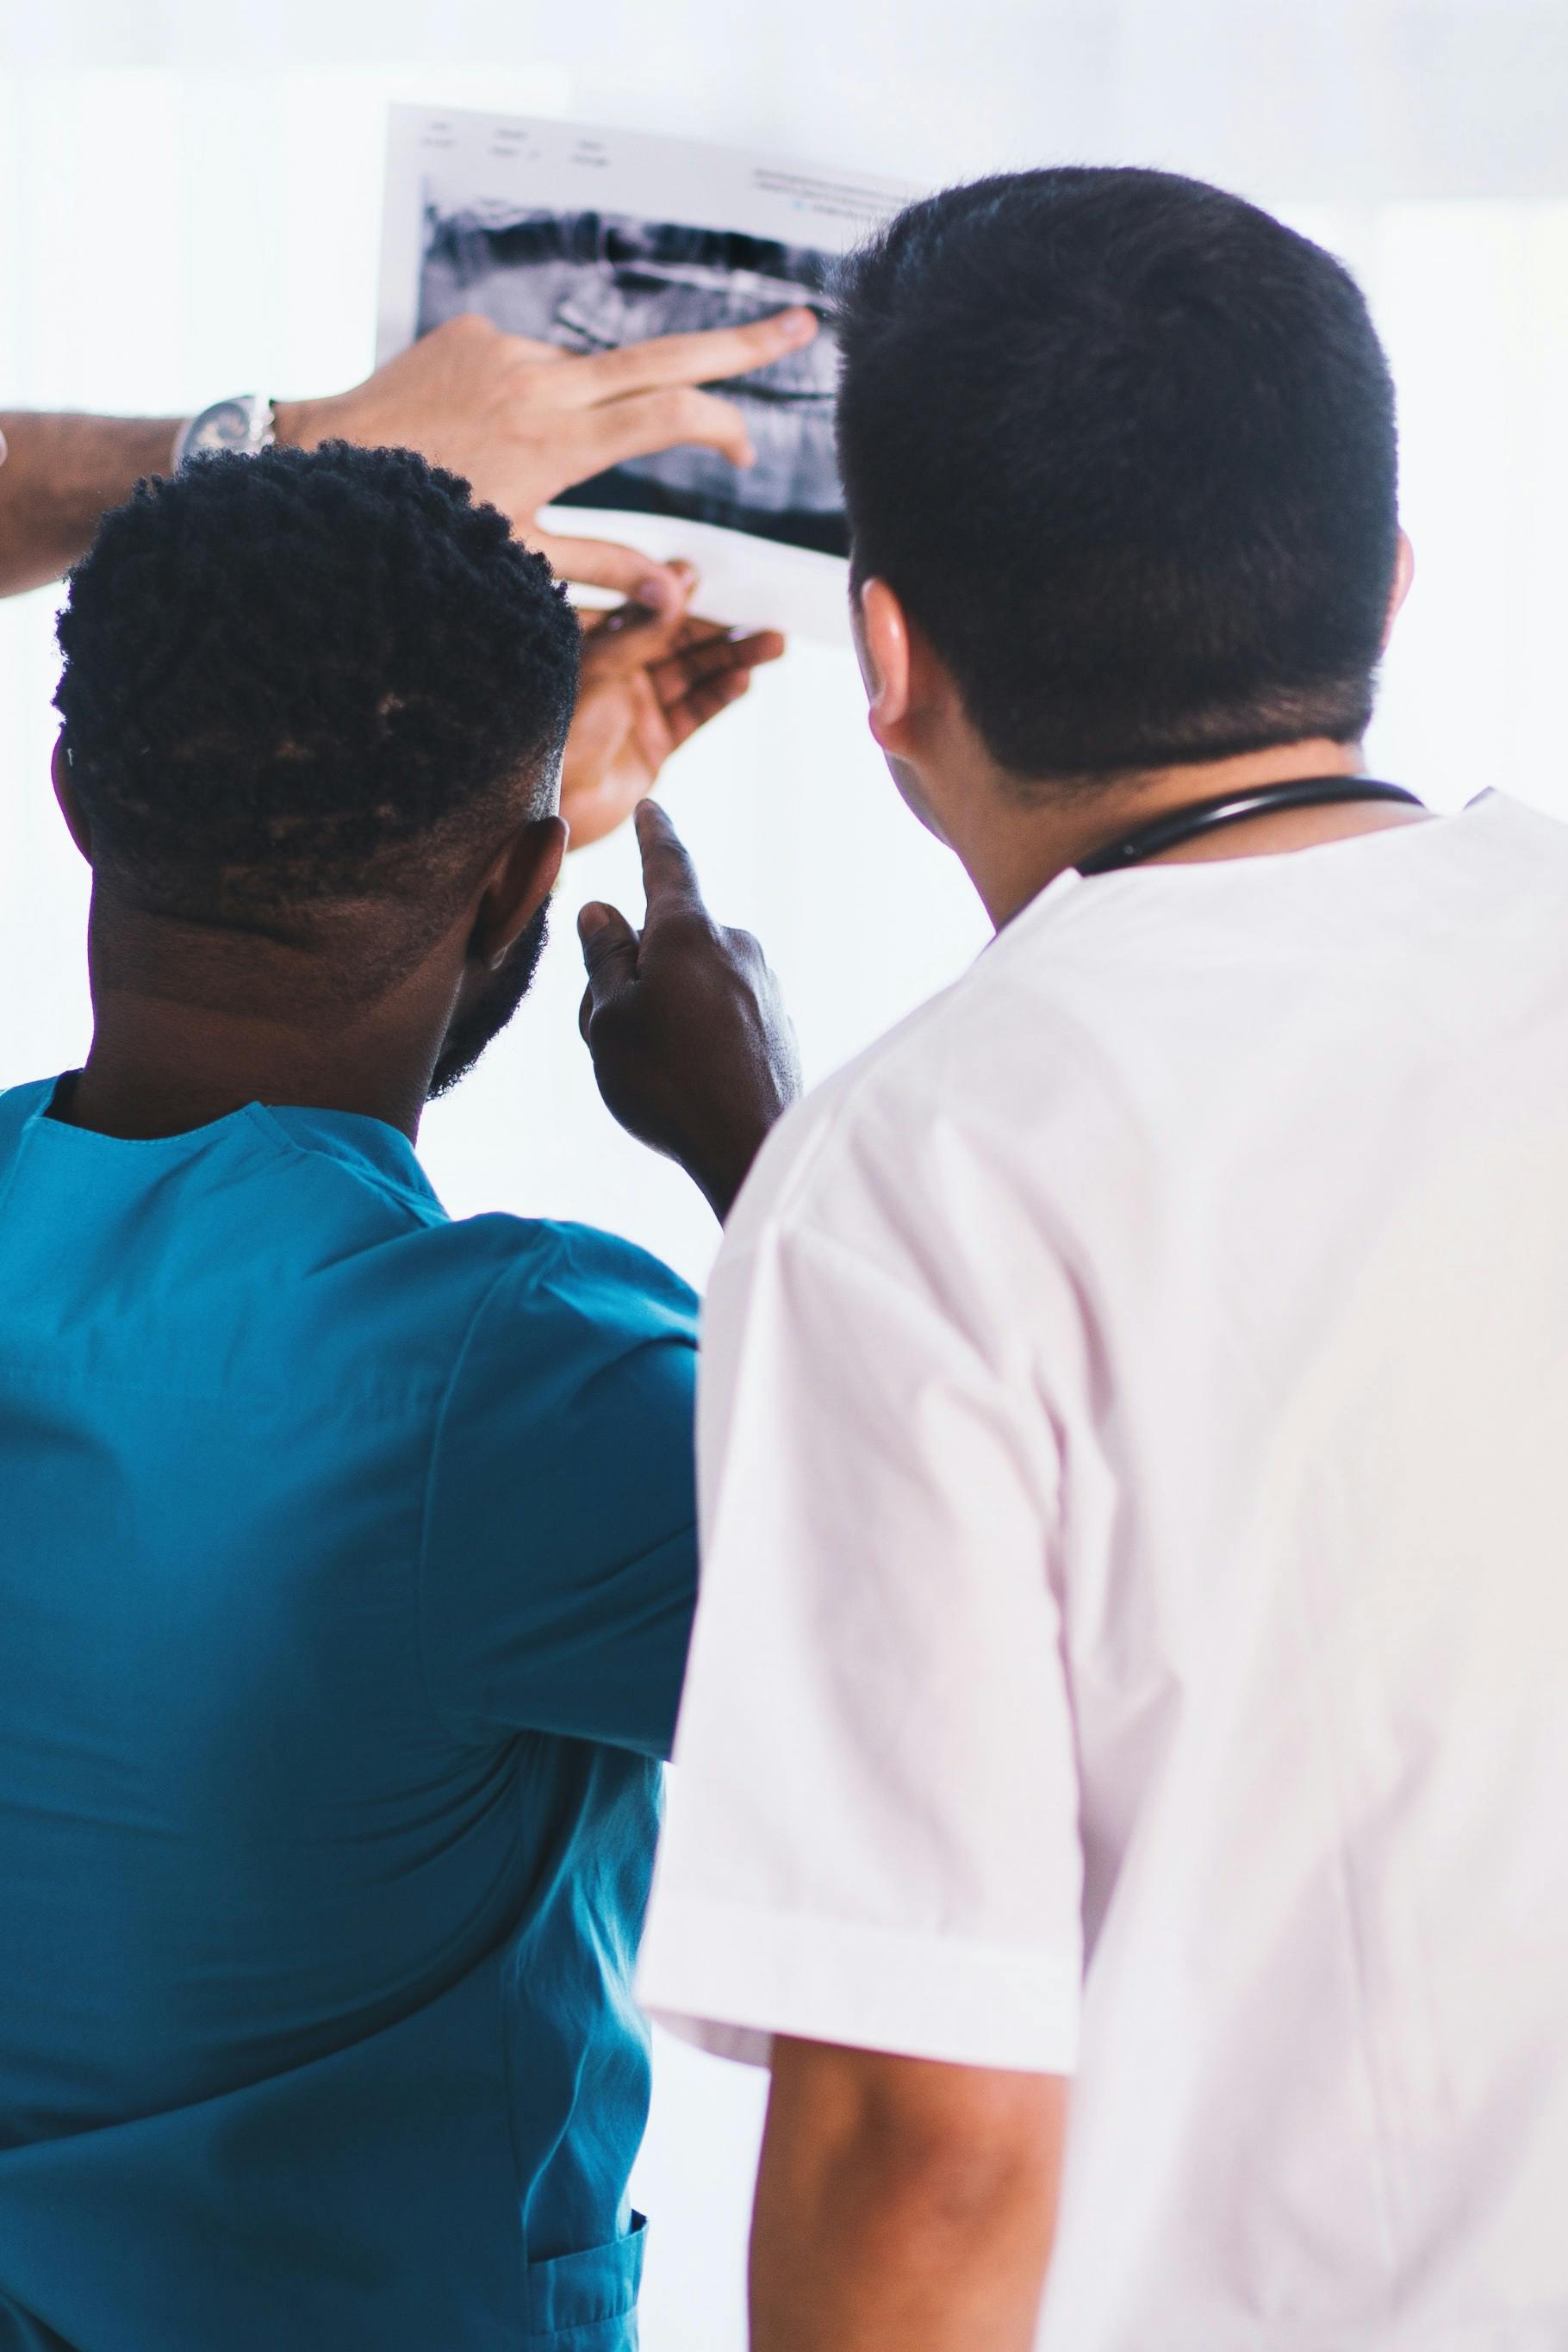 Health professionals examining an x-ray